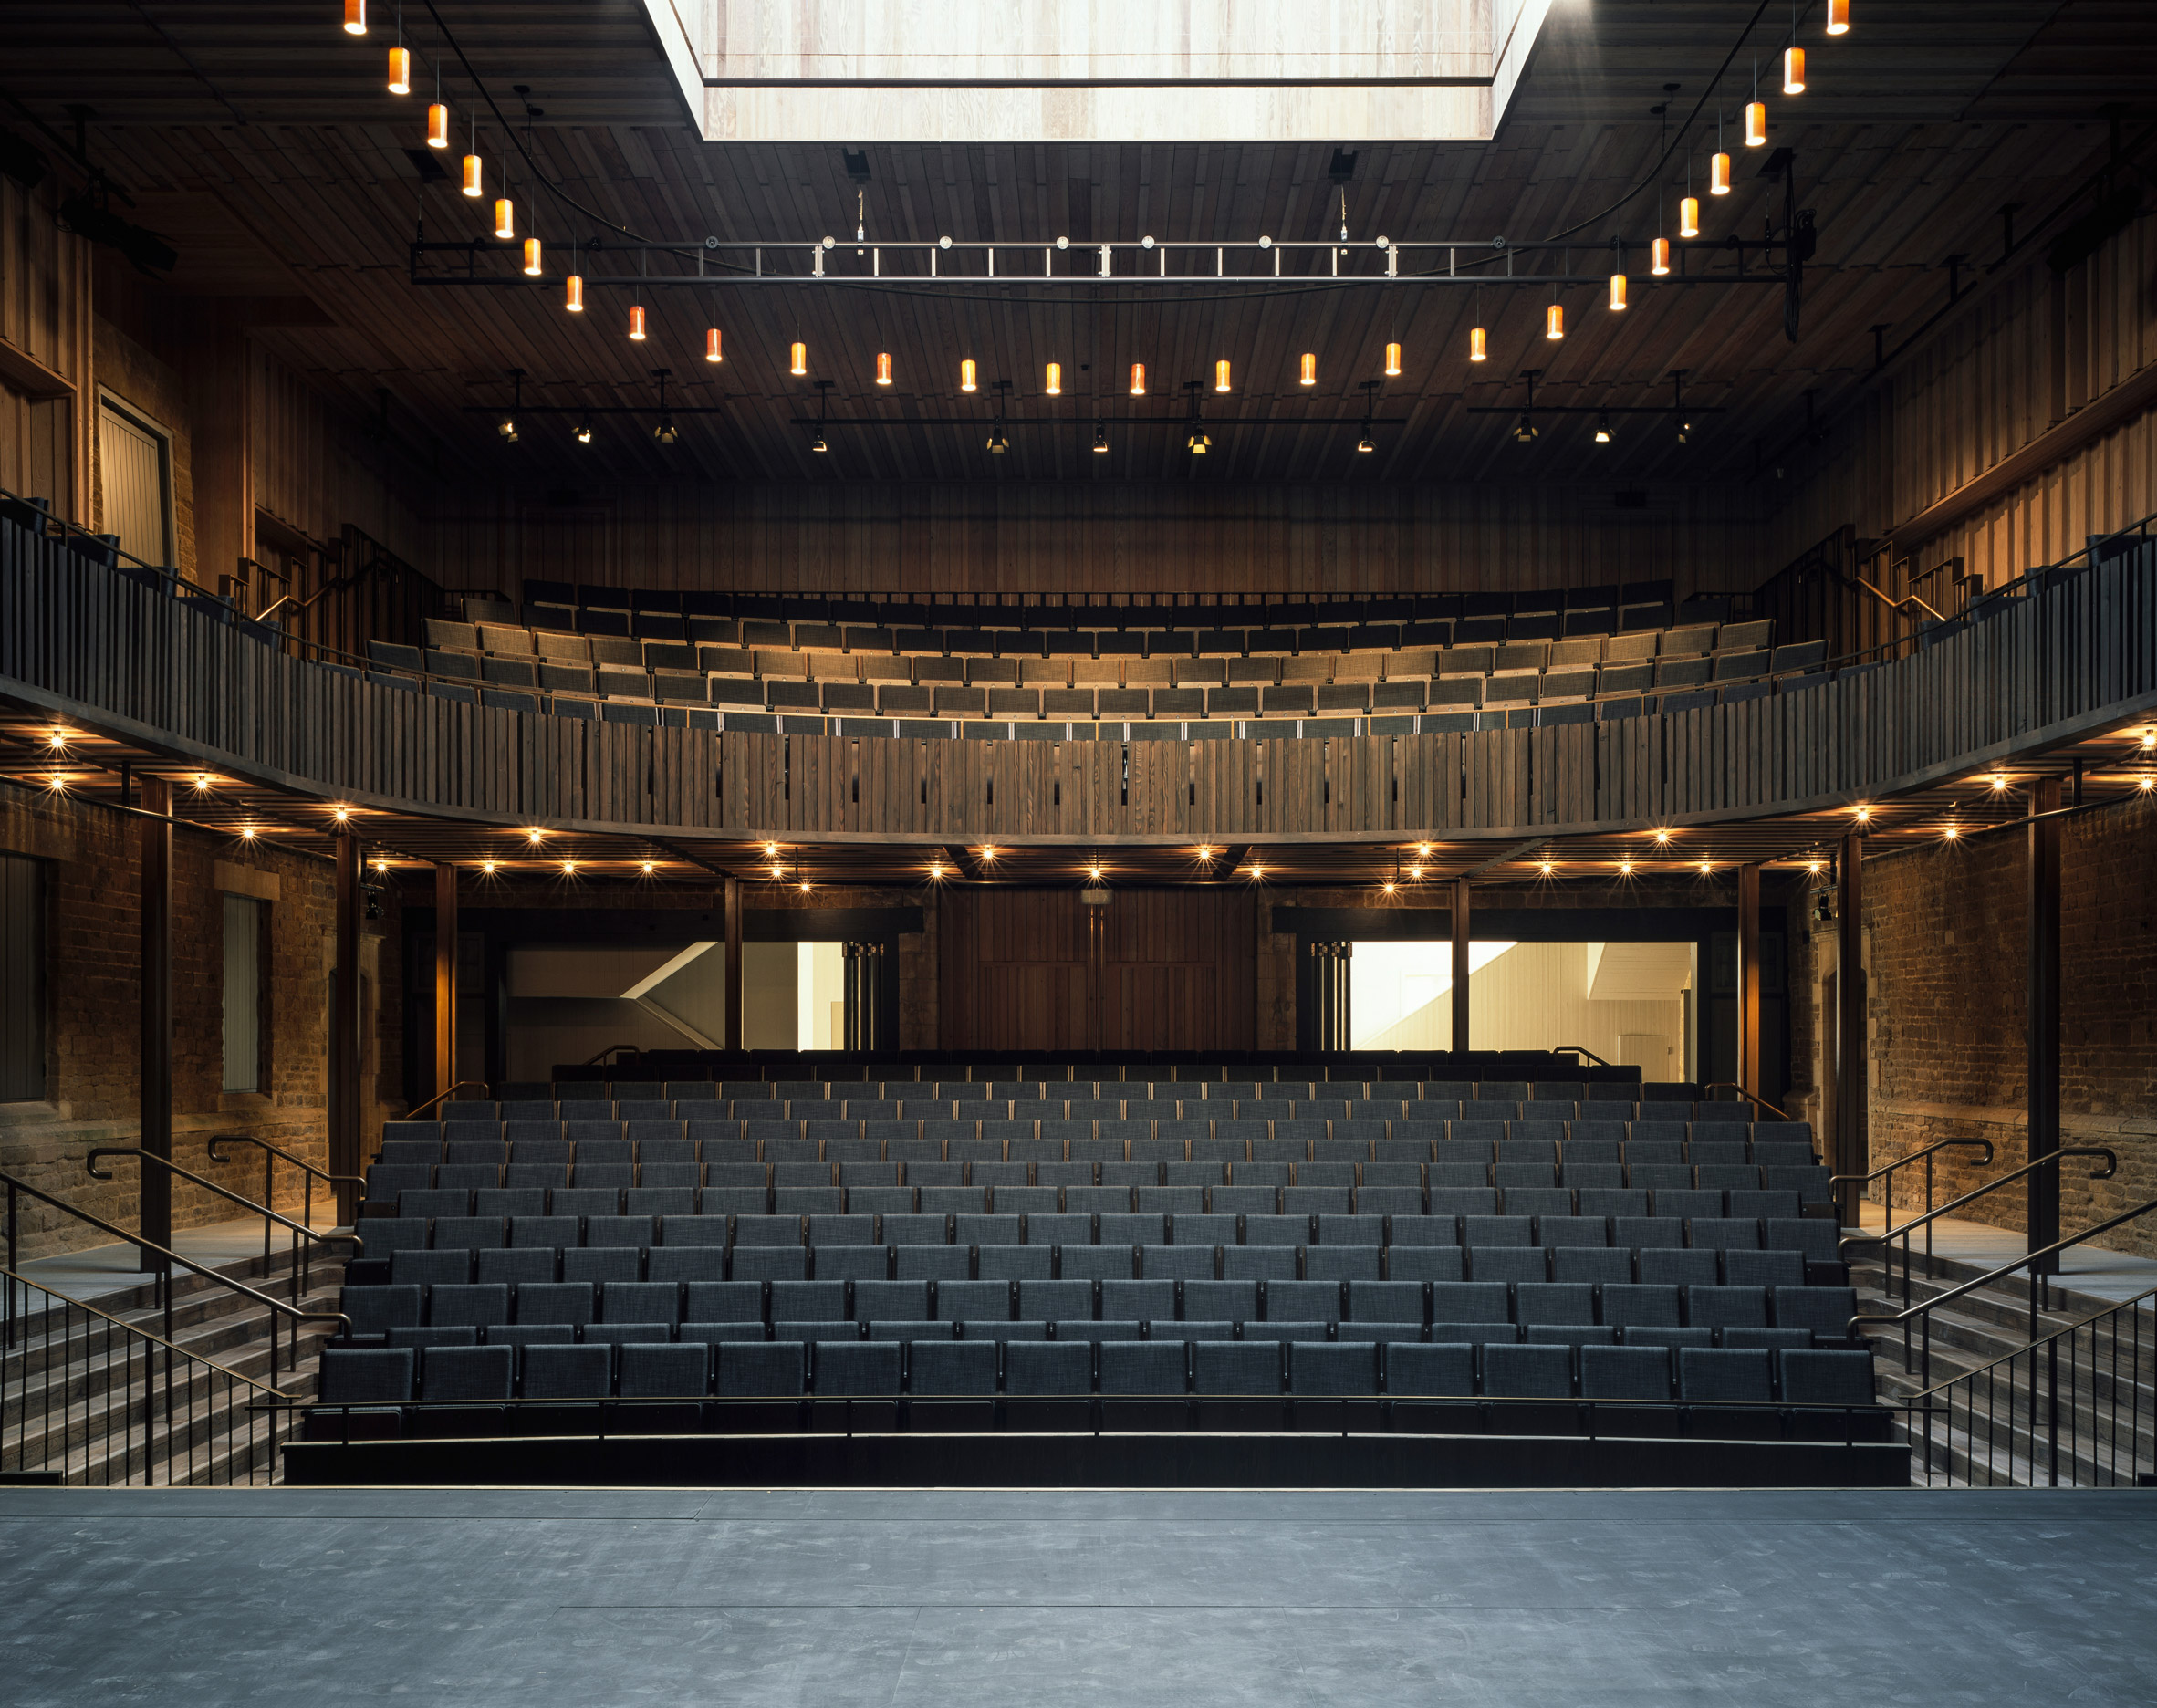 Stirling Prize 2019 shortlist: Nevill Holt Opera by Witherford Watson Mann Architects